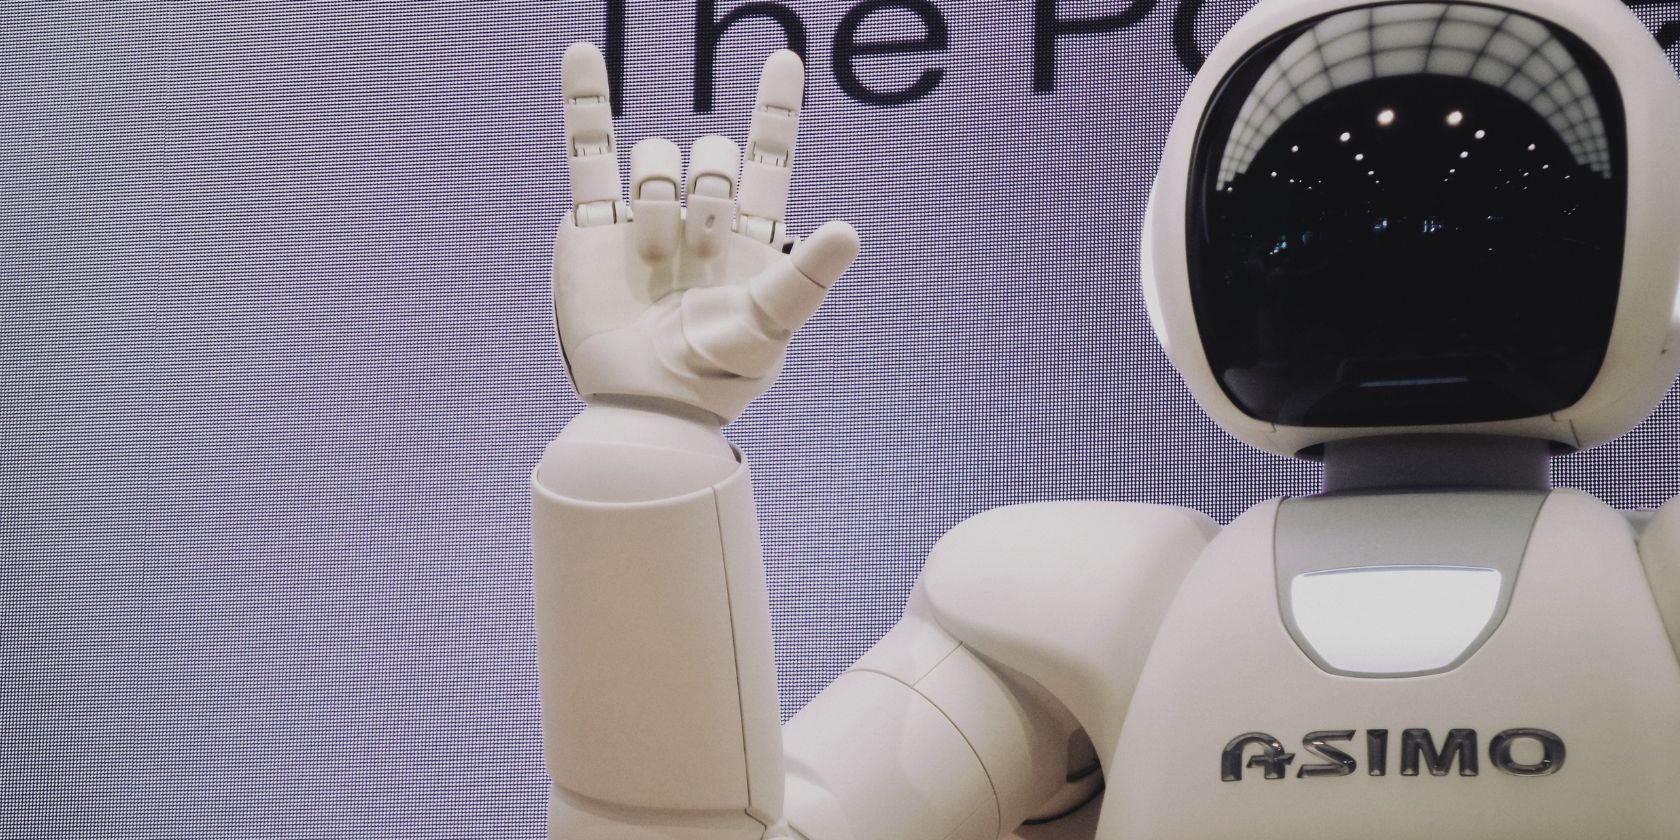 asimo robot showing rock hand gesture